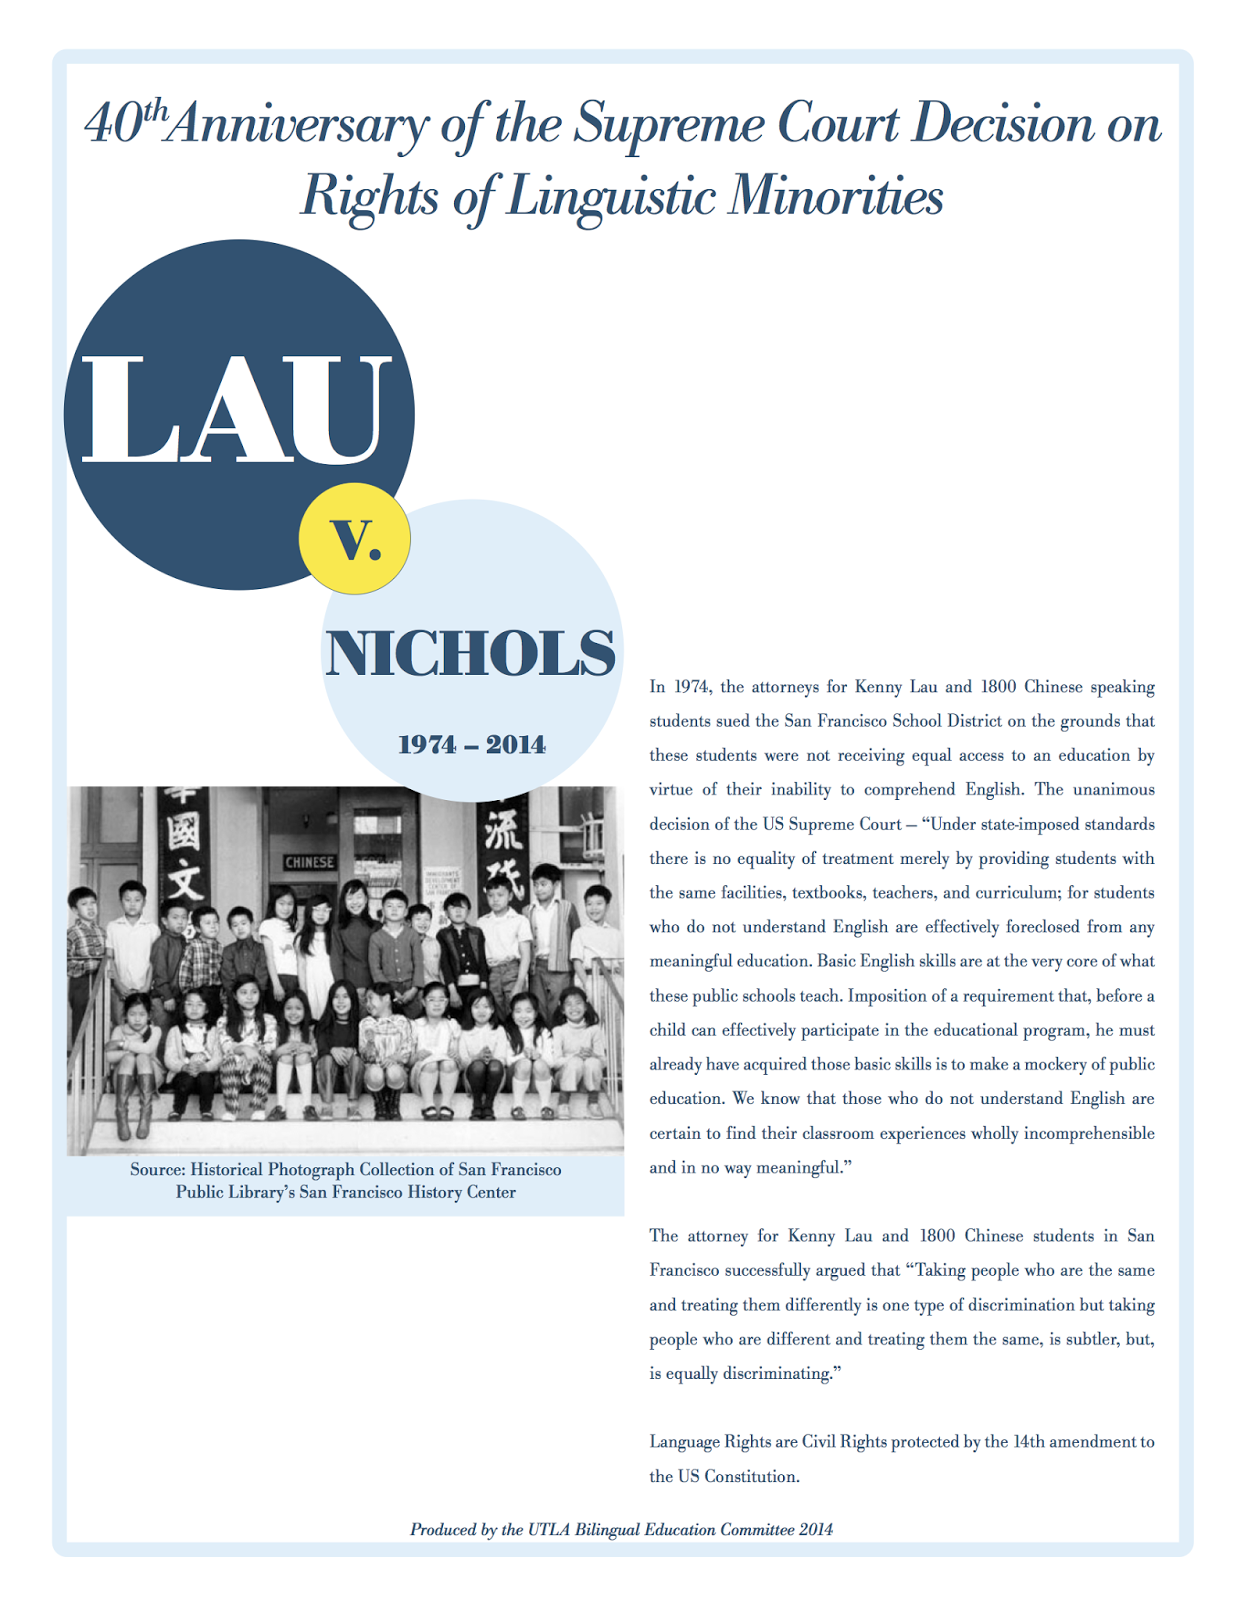 UTLA Bilingual Education Committee PSA: LAU V. NICHOLS